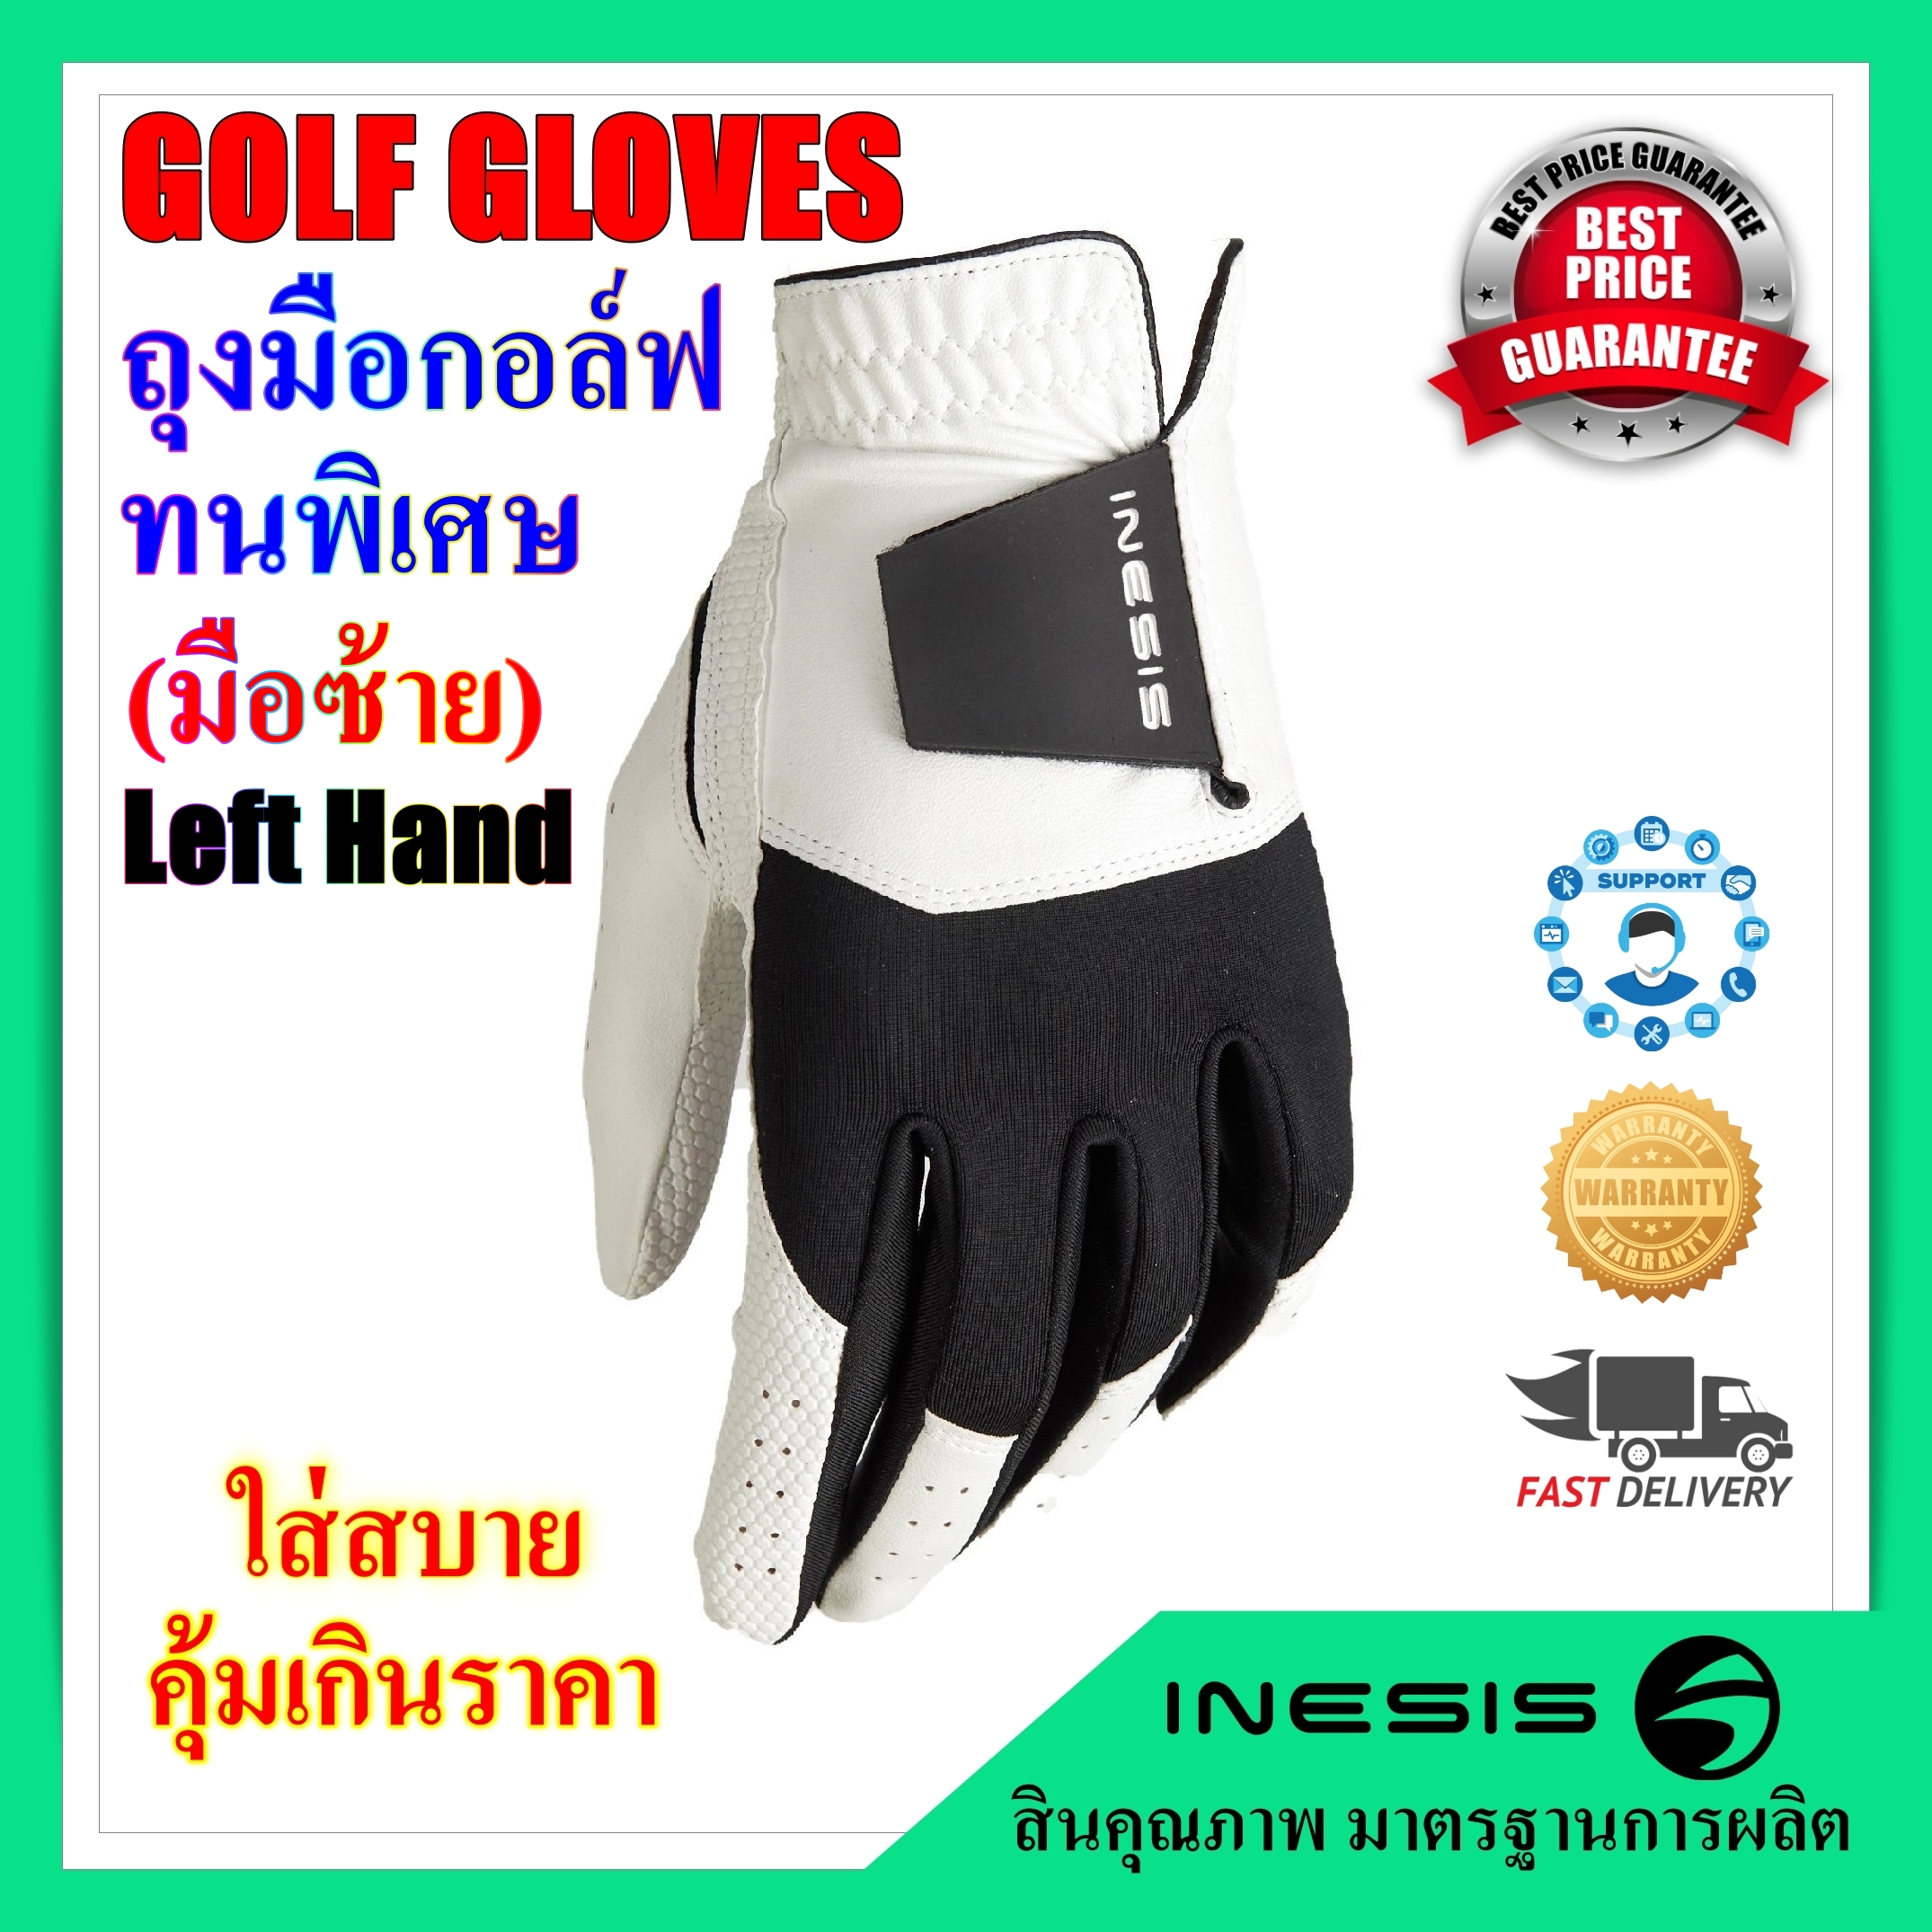 Golf Gloves ถุงมือกอล์ฟ ทนทานกว่าปกติ INESIS 100 Left Hand (มือซ้าย)